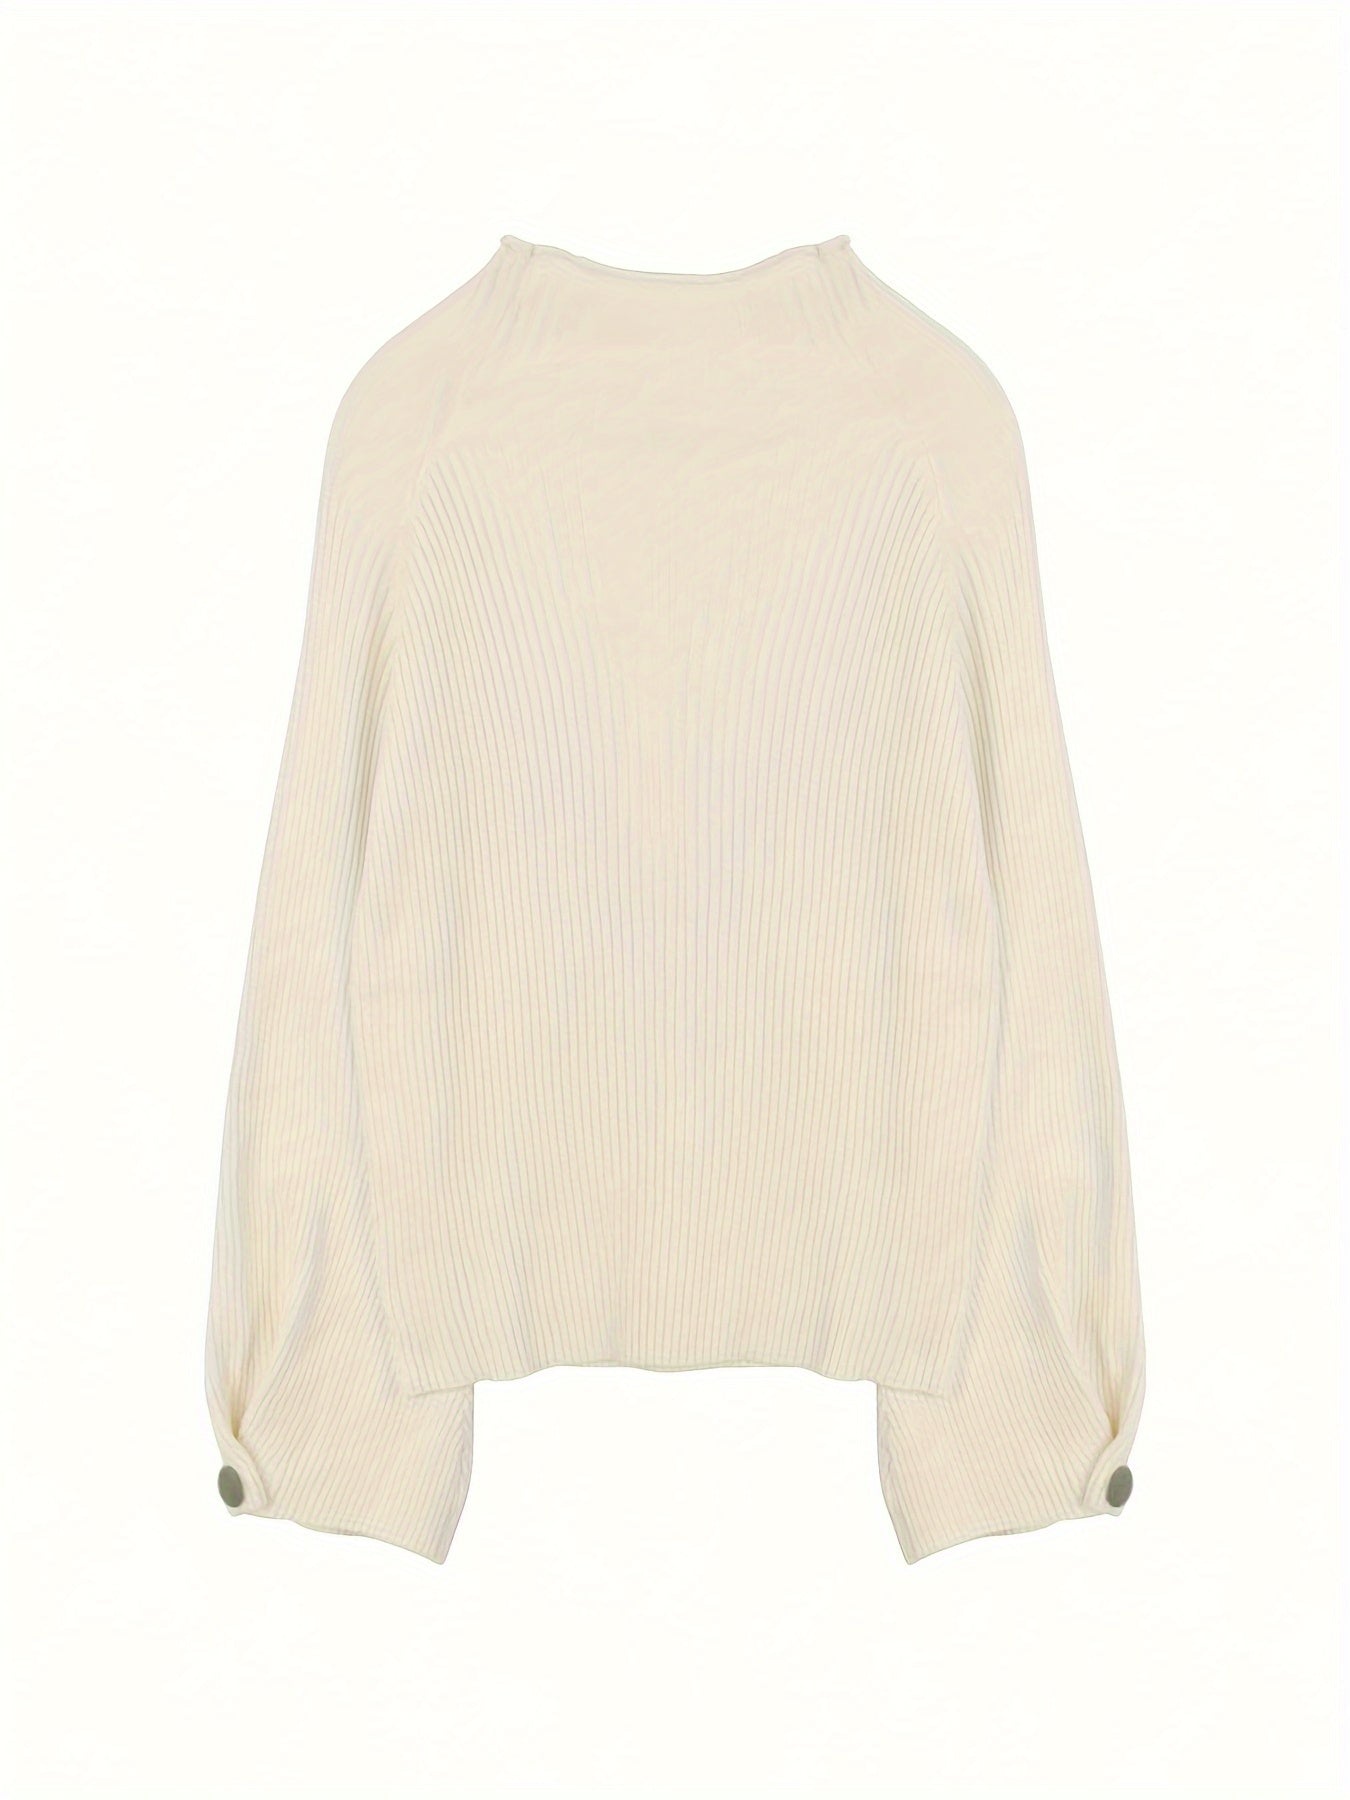 Vzyzv Button Decor Mock Neck Sweater, Elegant Long Sleeve Sweater For Fall & Winter, Women's Clothing